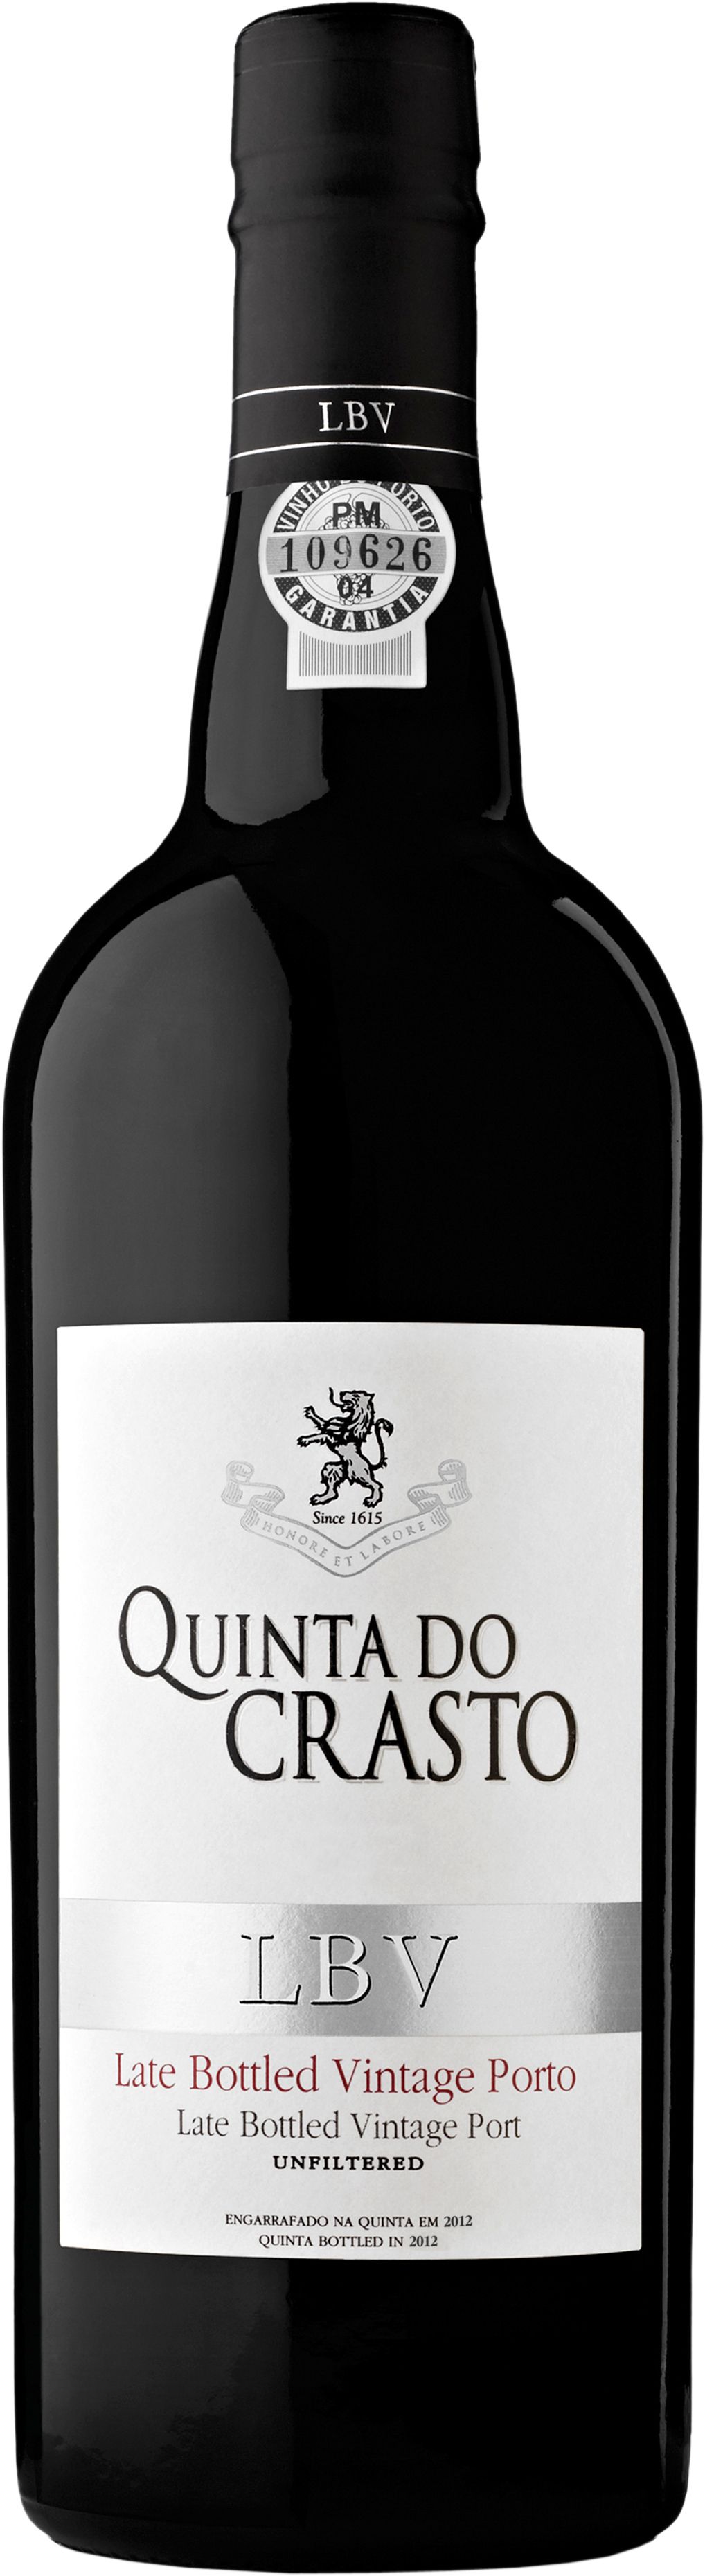 Quinta Do Crasto, Late Bottled Vintage Porto, 2008